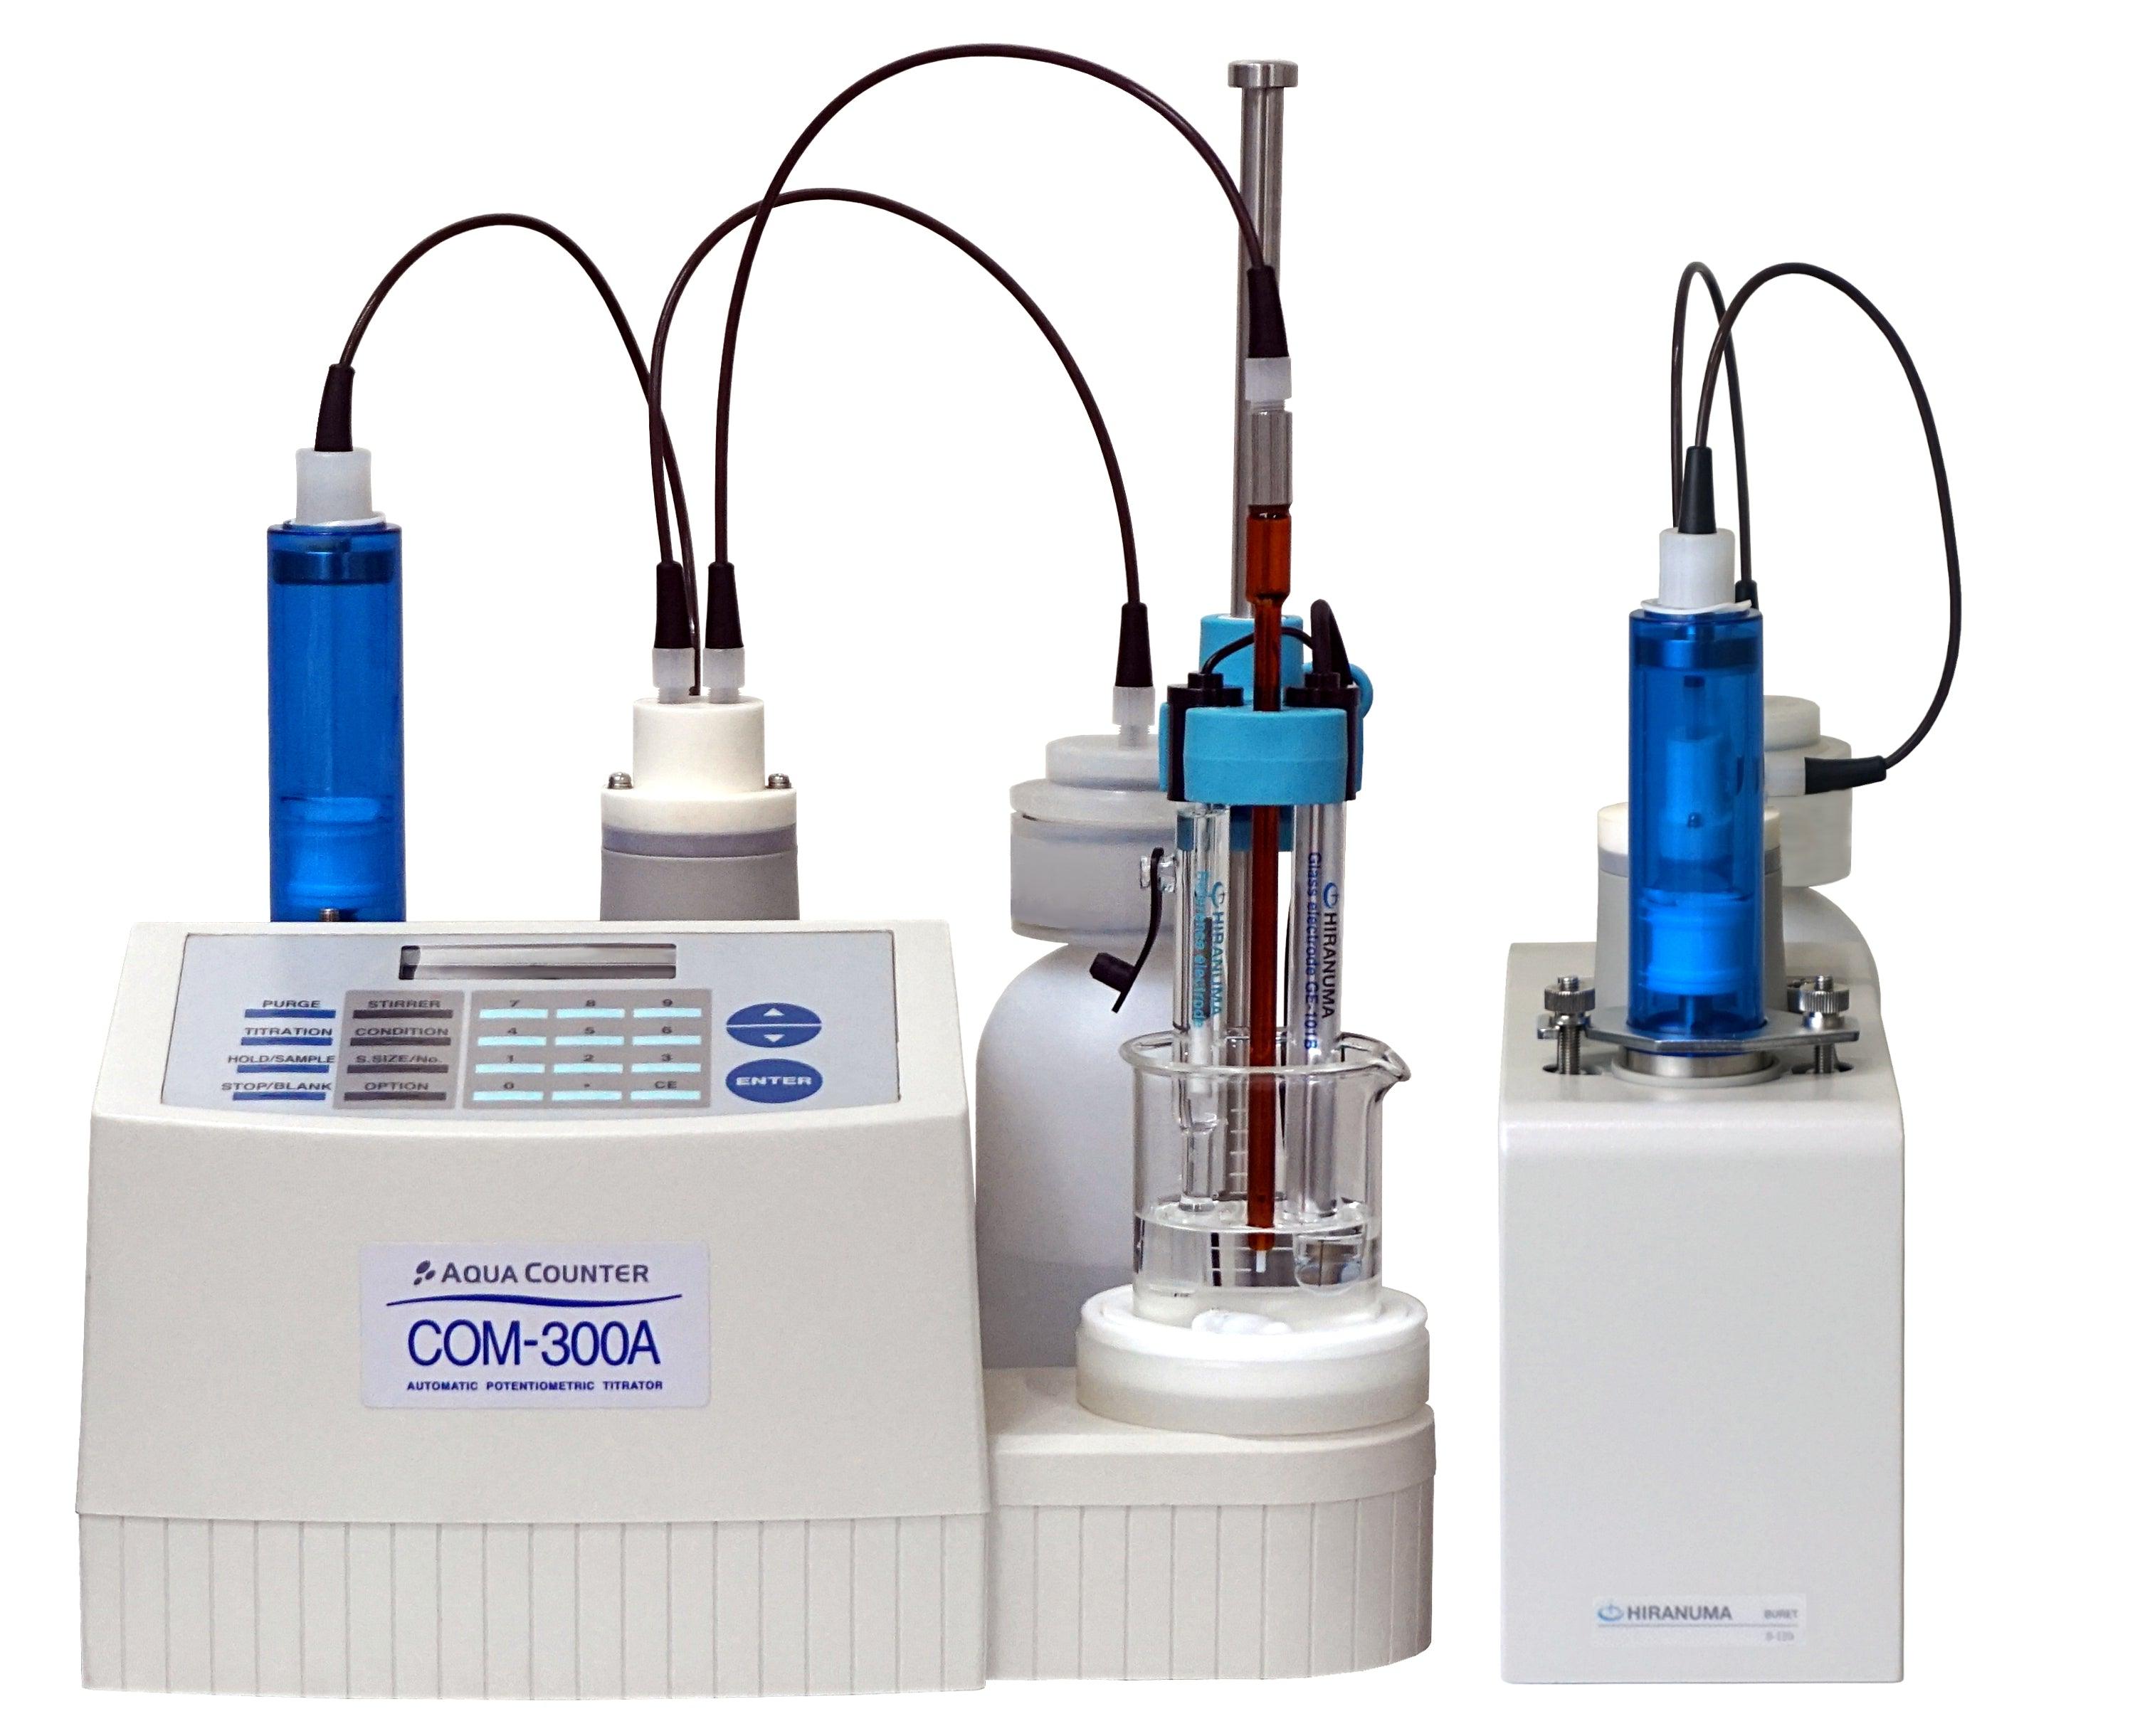 Aquacounter COM-300A Potentiometric Titrator | Hiranuma - JM Science